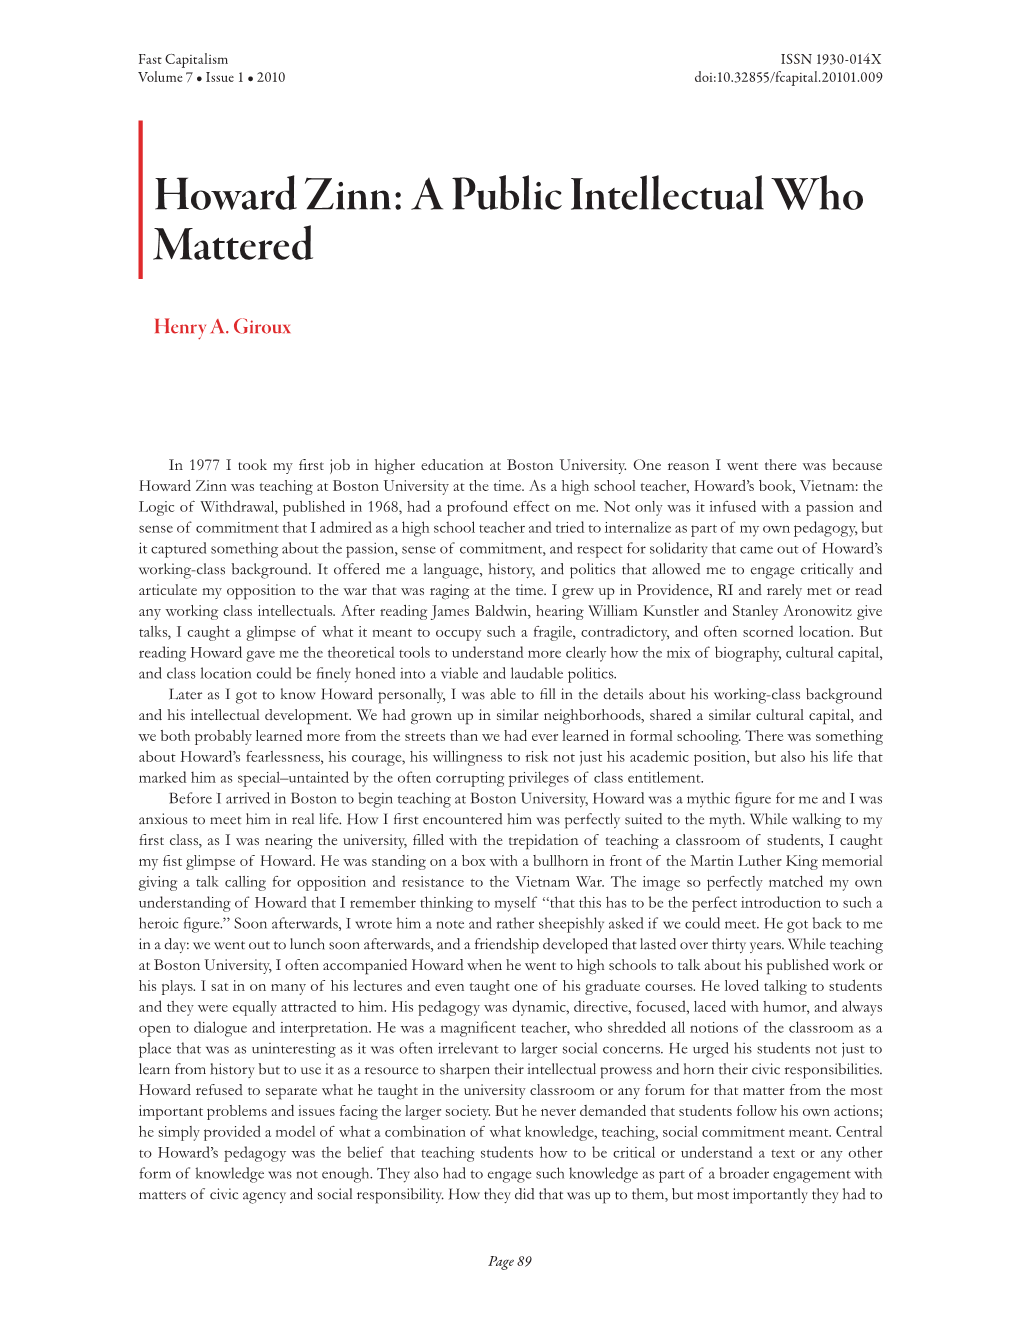 Howard Zinn: a Public Intellectual Who Mattered